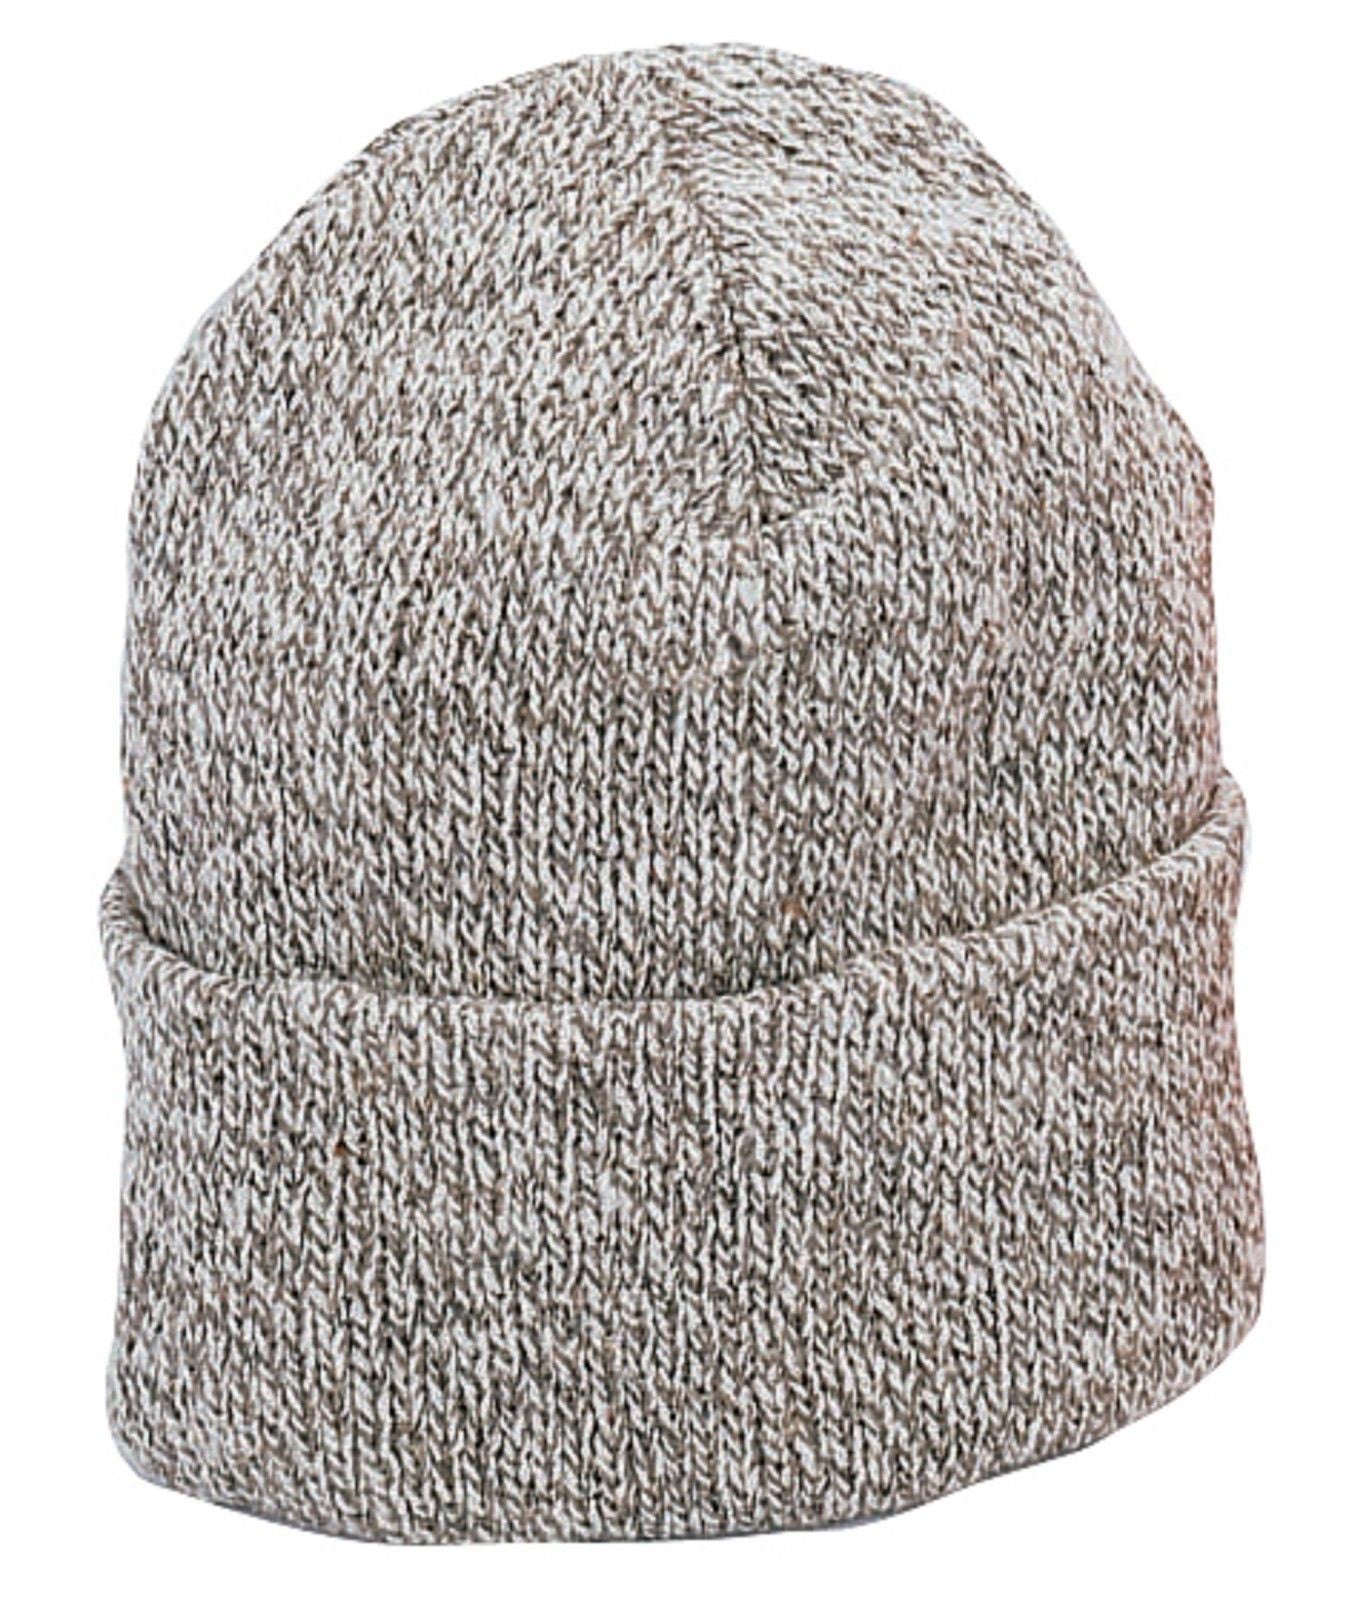 Ragg Wool Winter Watch Cap Cold Weather Soft Snug Comfy Snow Ski Hat USA Made